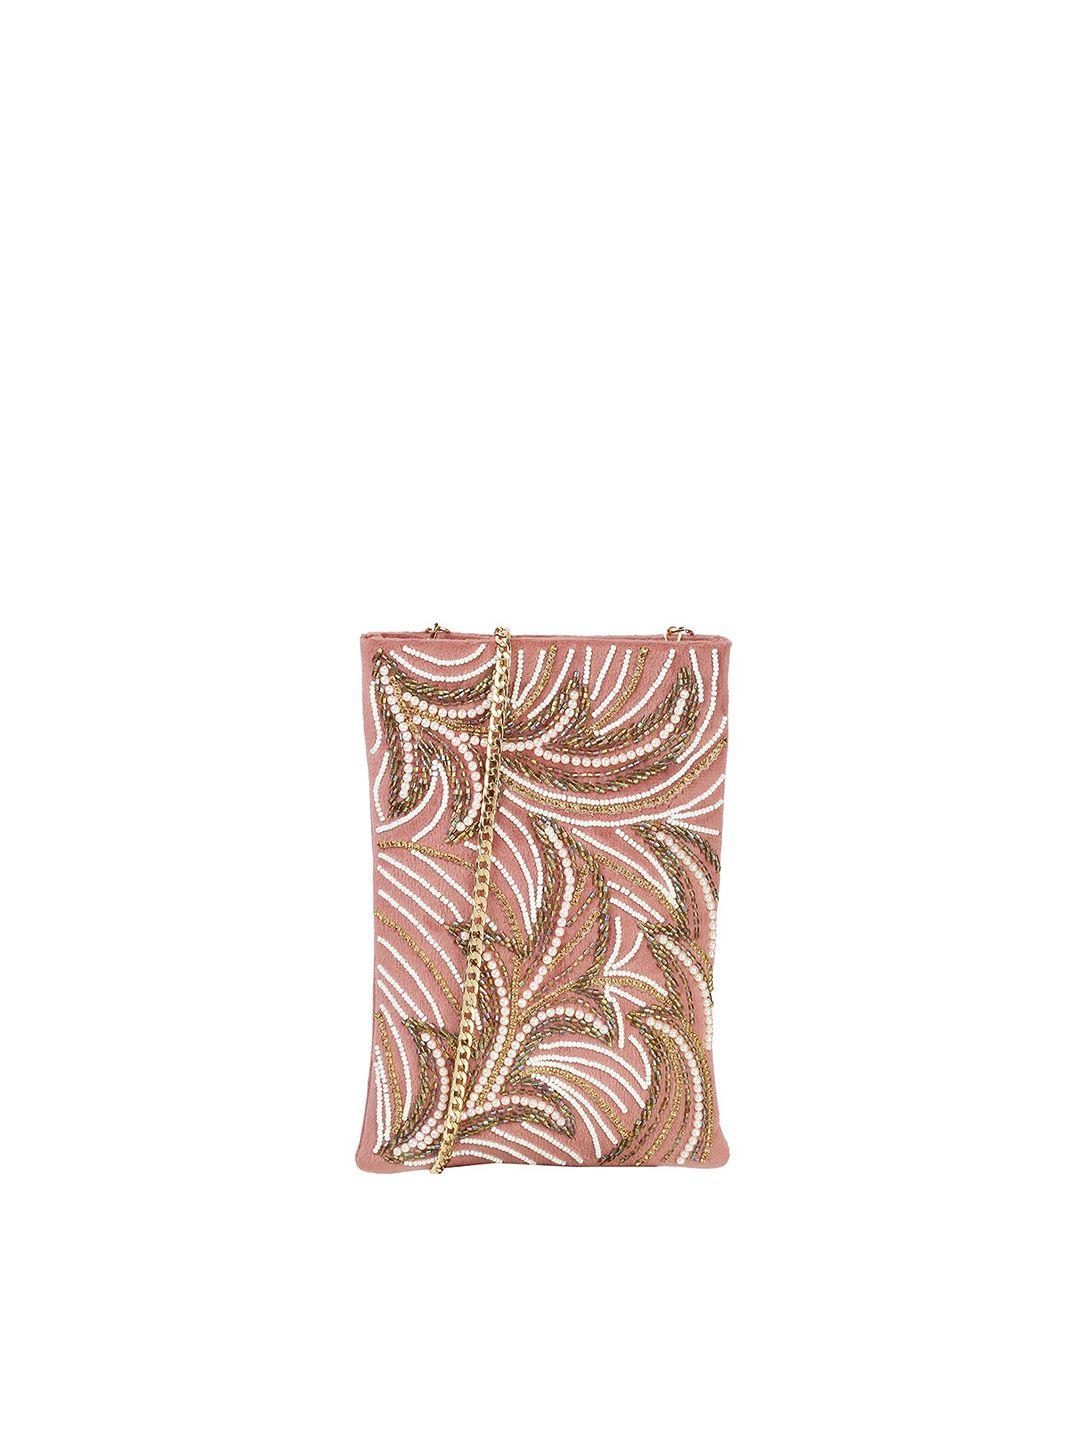 metro peach-coloured embroidered purse clutch